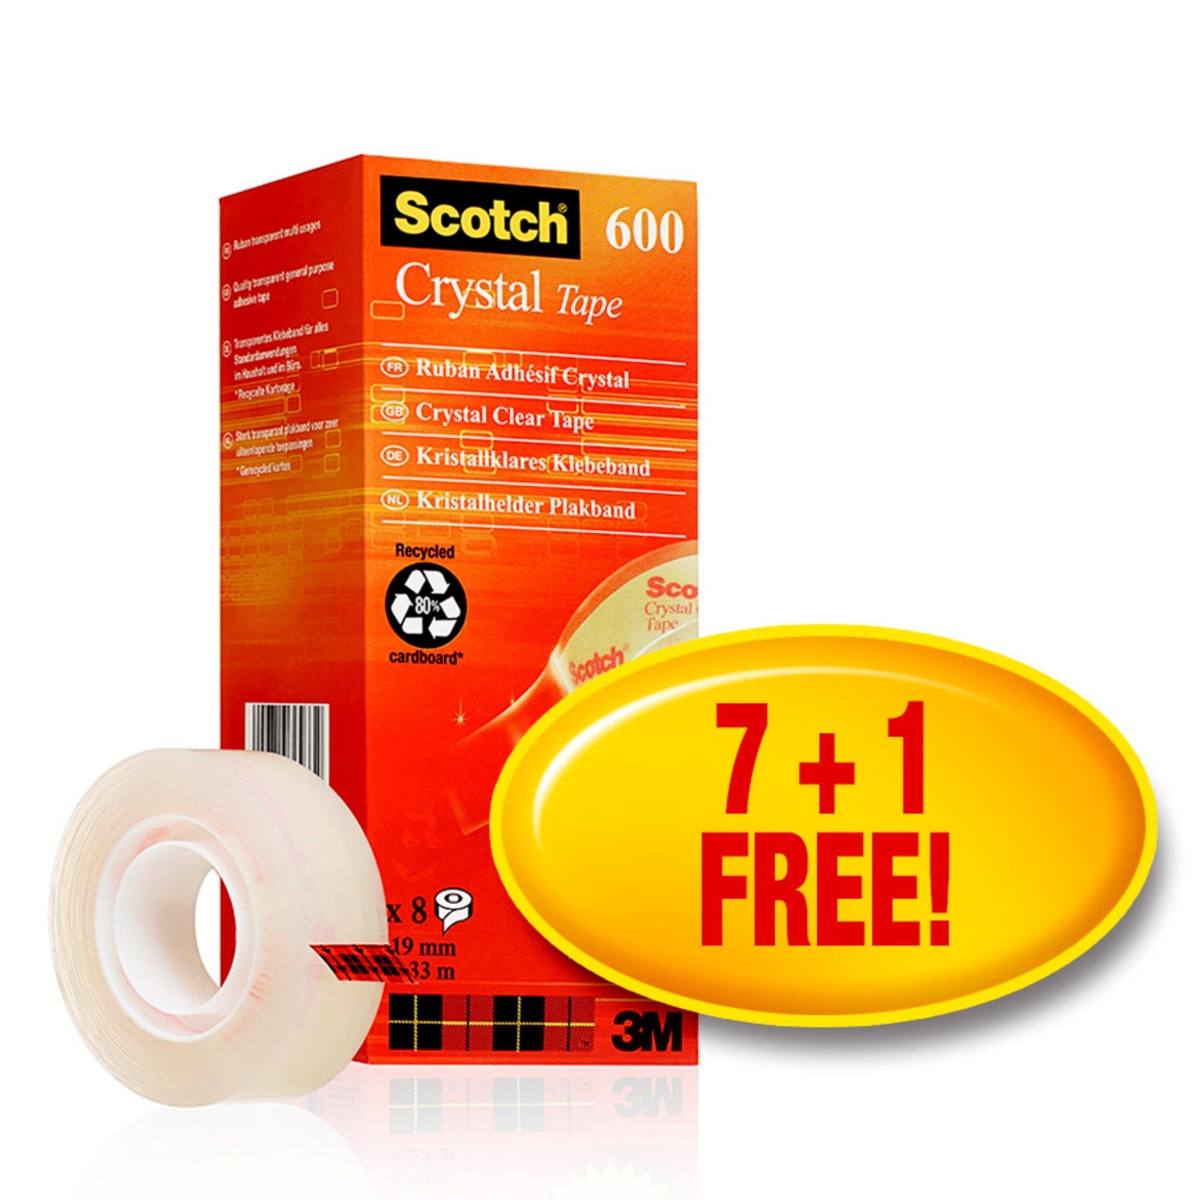 3M Scotch Crystal adhesive tape promotion, 8 rolls 19 mm x 33 m